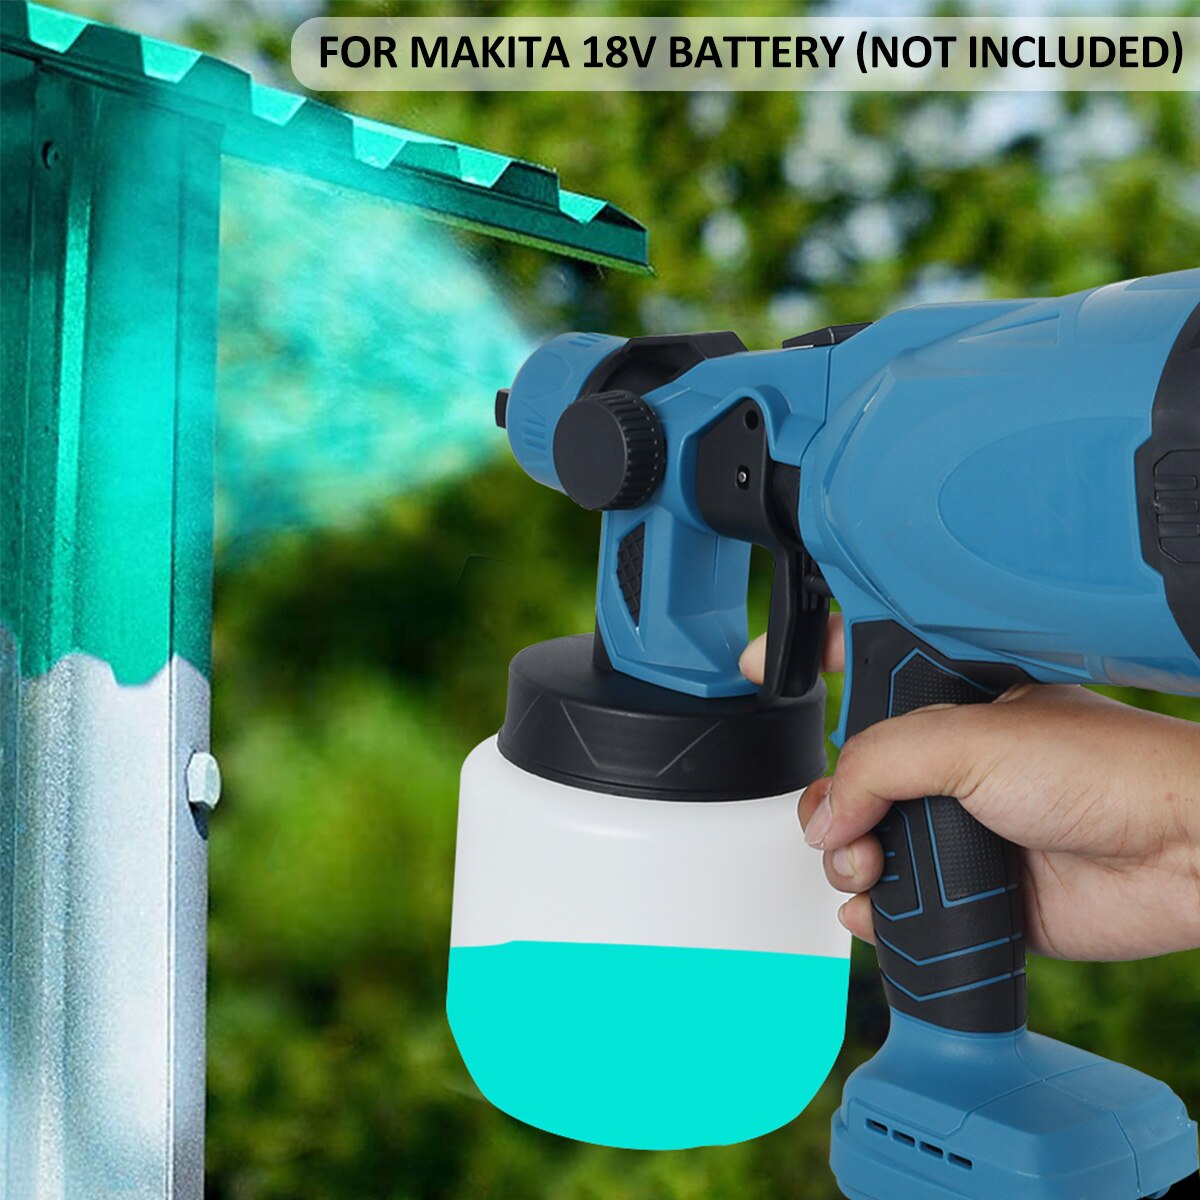 800ML Cordless Electric Spray Gun 3 Nozzle Flow Control Airbrush High Power Paint Sprayer Power Tool For Makita 18V Battery-Shalav5